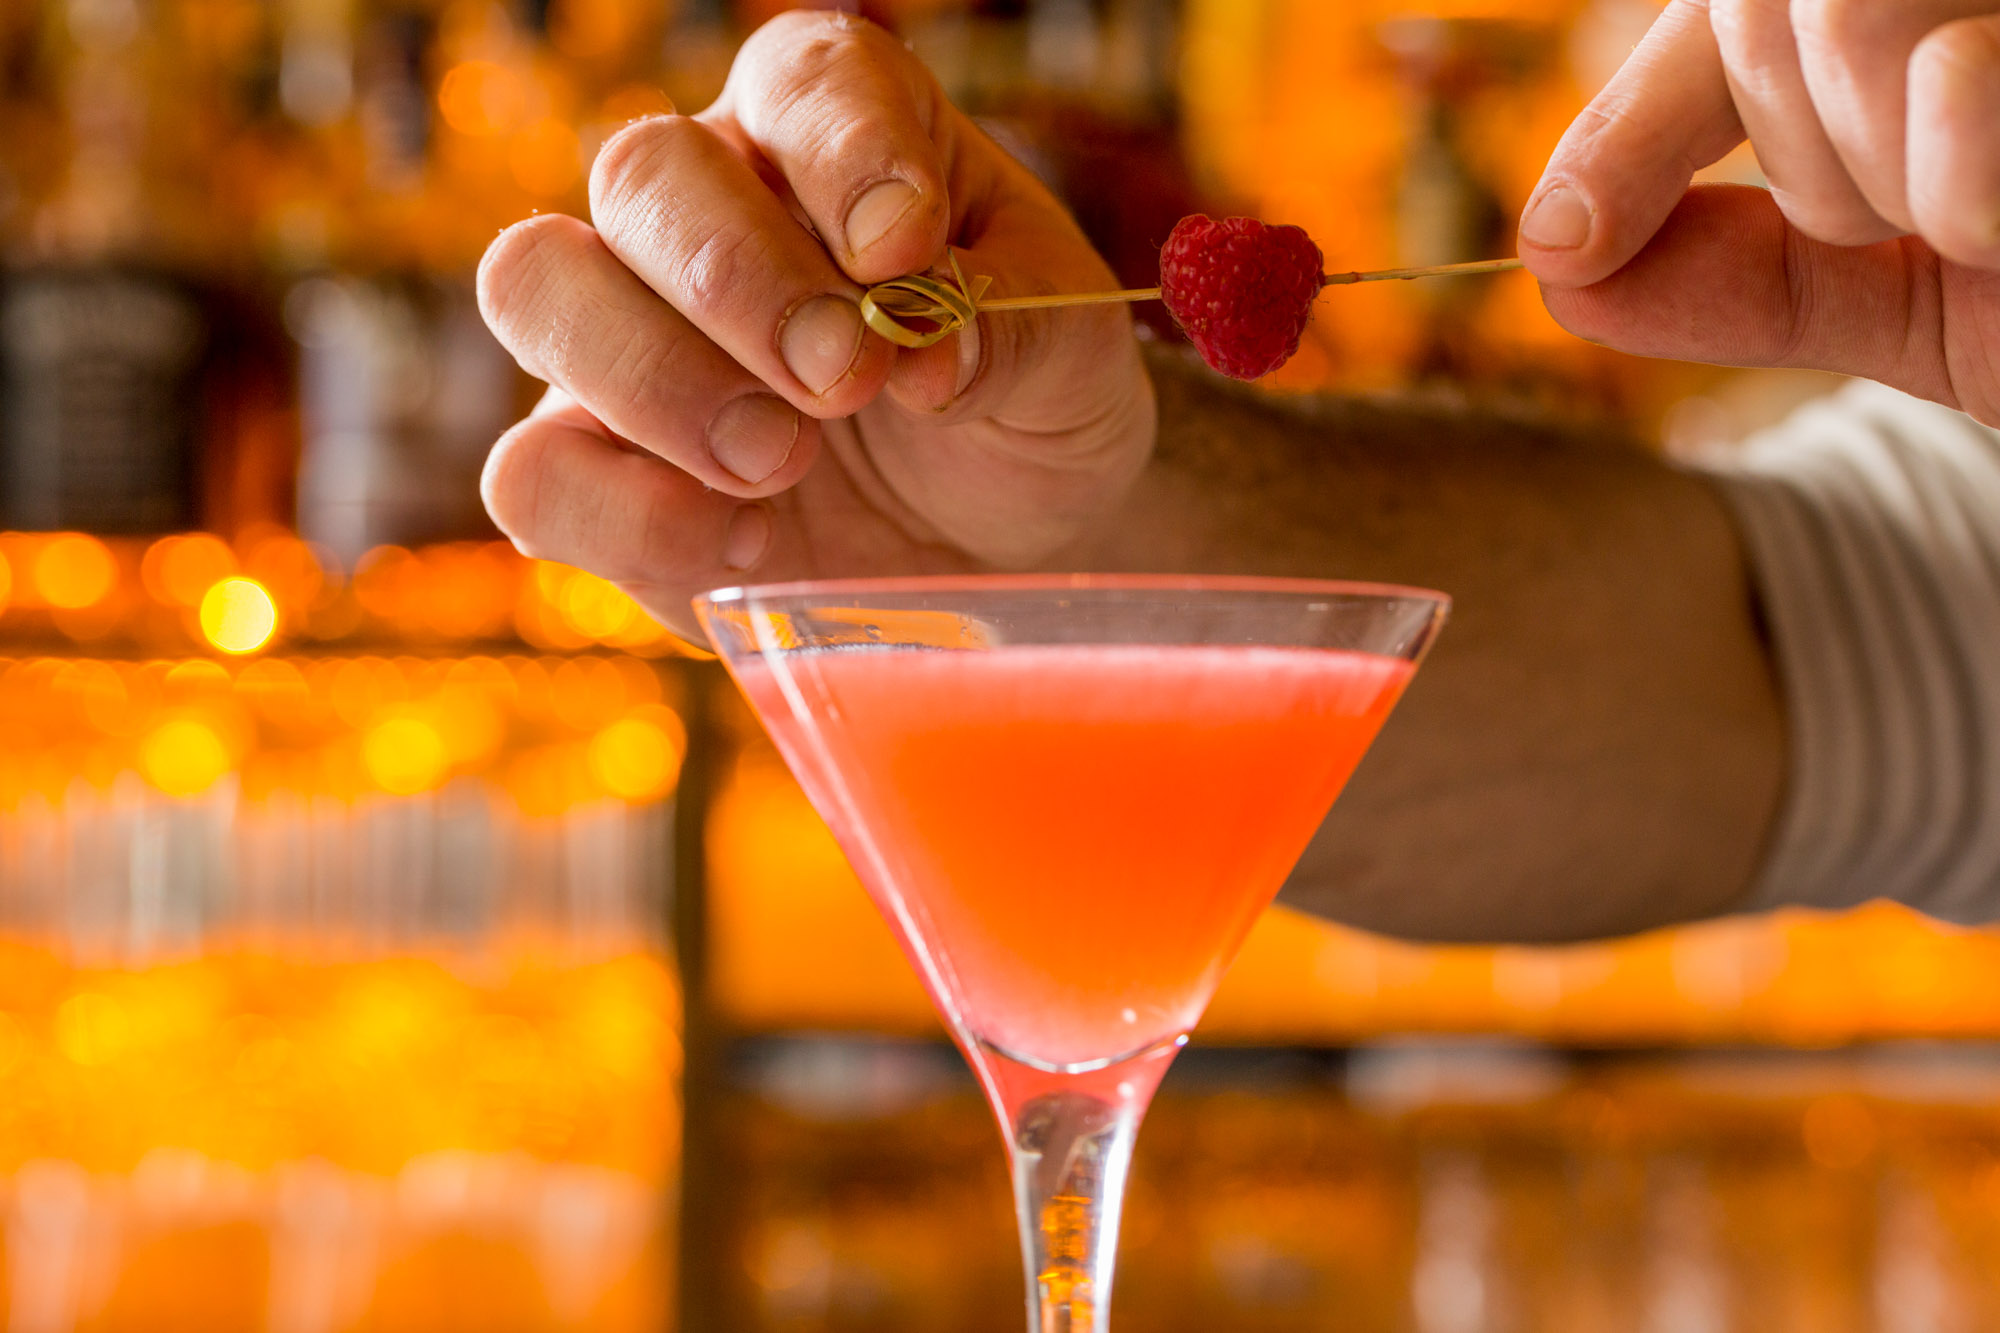 A bartender setting a raspberry garnish on a cocktail.